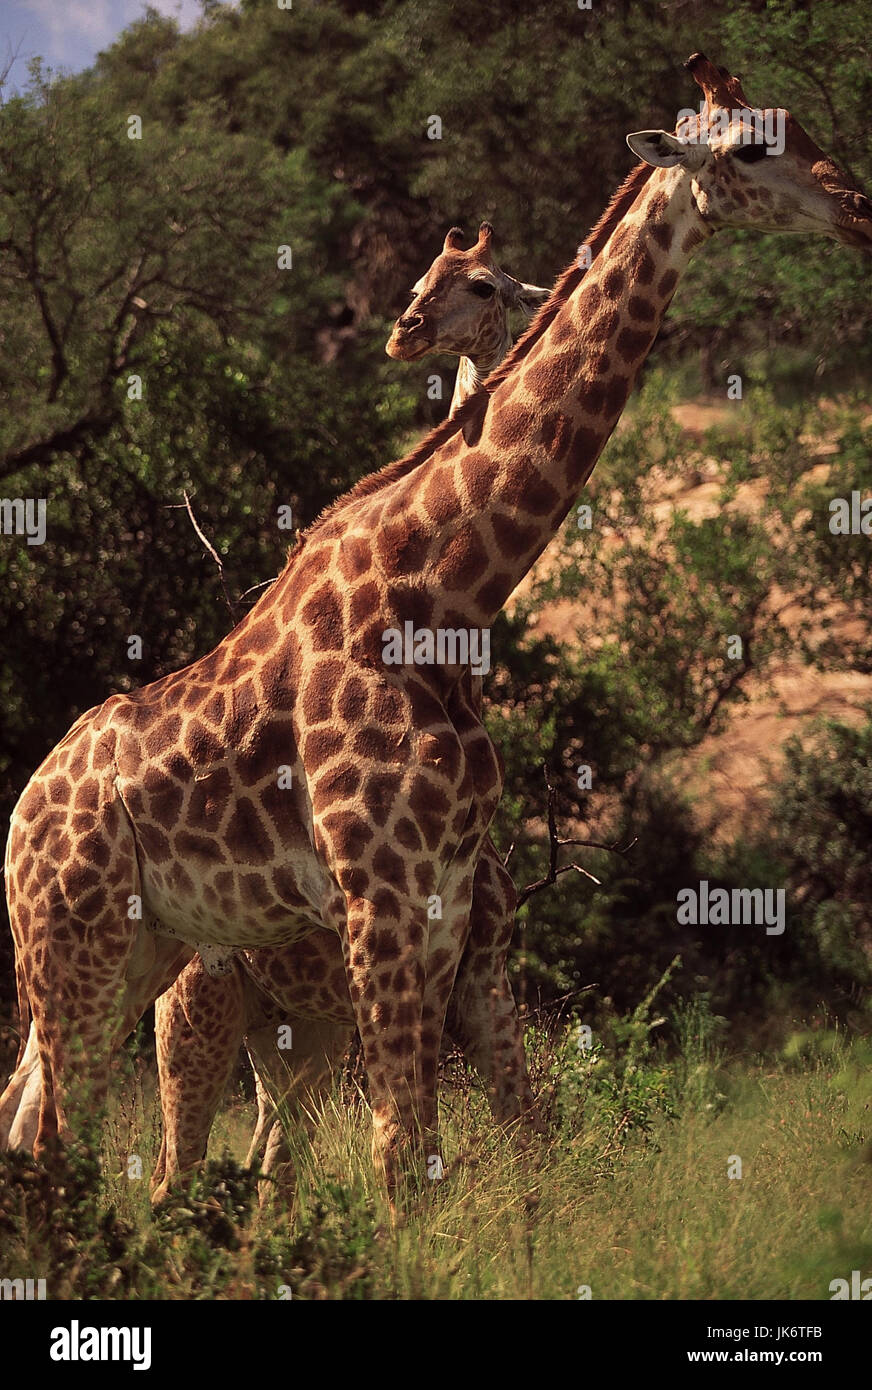 Südafrika, Mpumalanga, Kruger,  Nationalpark, Giraffen, Giraffa camelopardalis Afrika, Wildreservat, Säugetiere, Wildtiere, Paarhufer, Artiodactyla, Giraffen, Giraffidae, Langhalsgiraffen, Steppengiraffen, Wiederkäuer, zwei, neugierig, interessiert Stock Photo